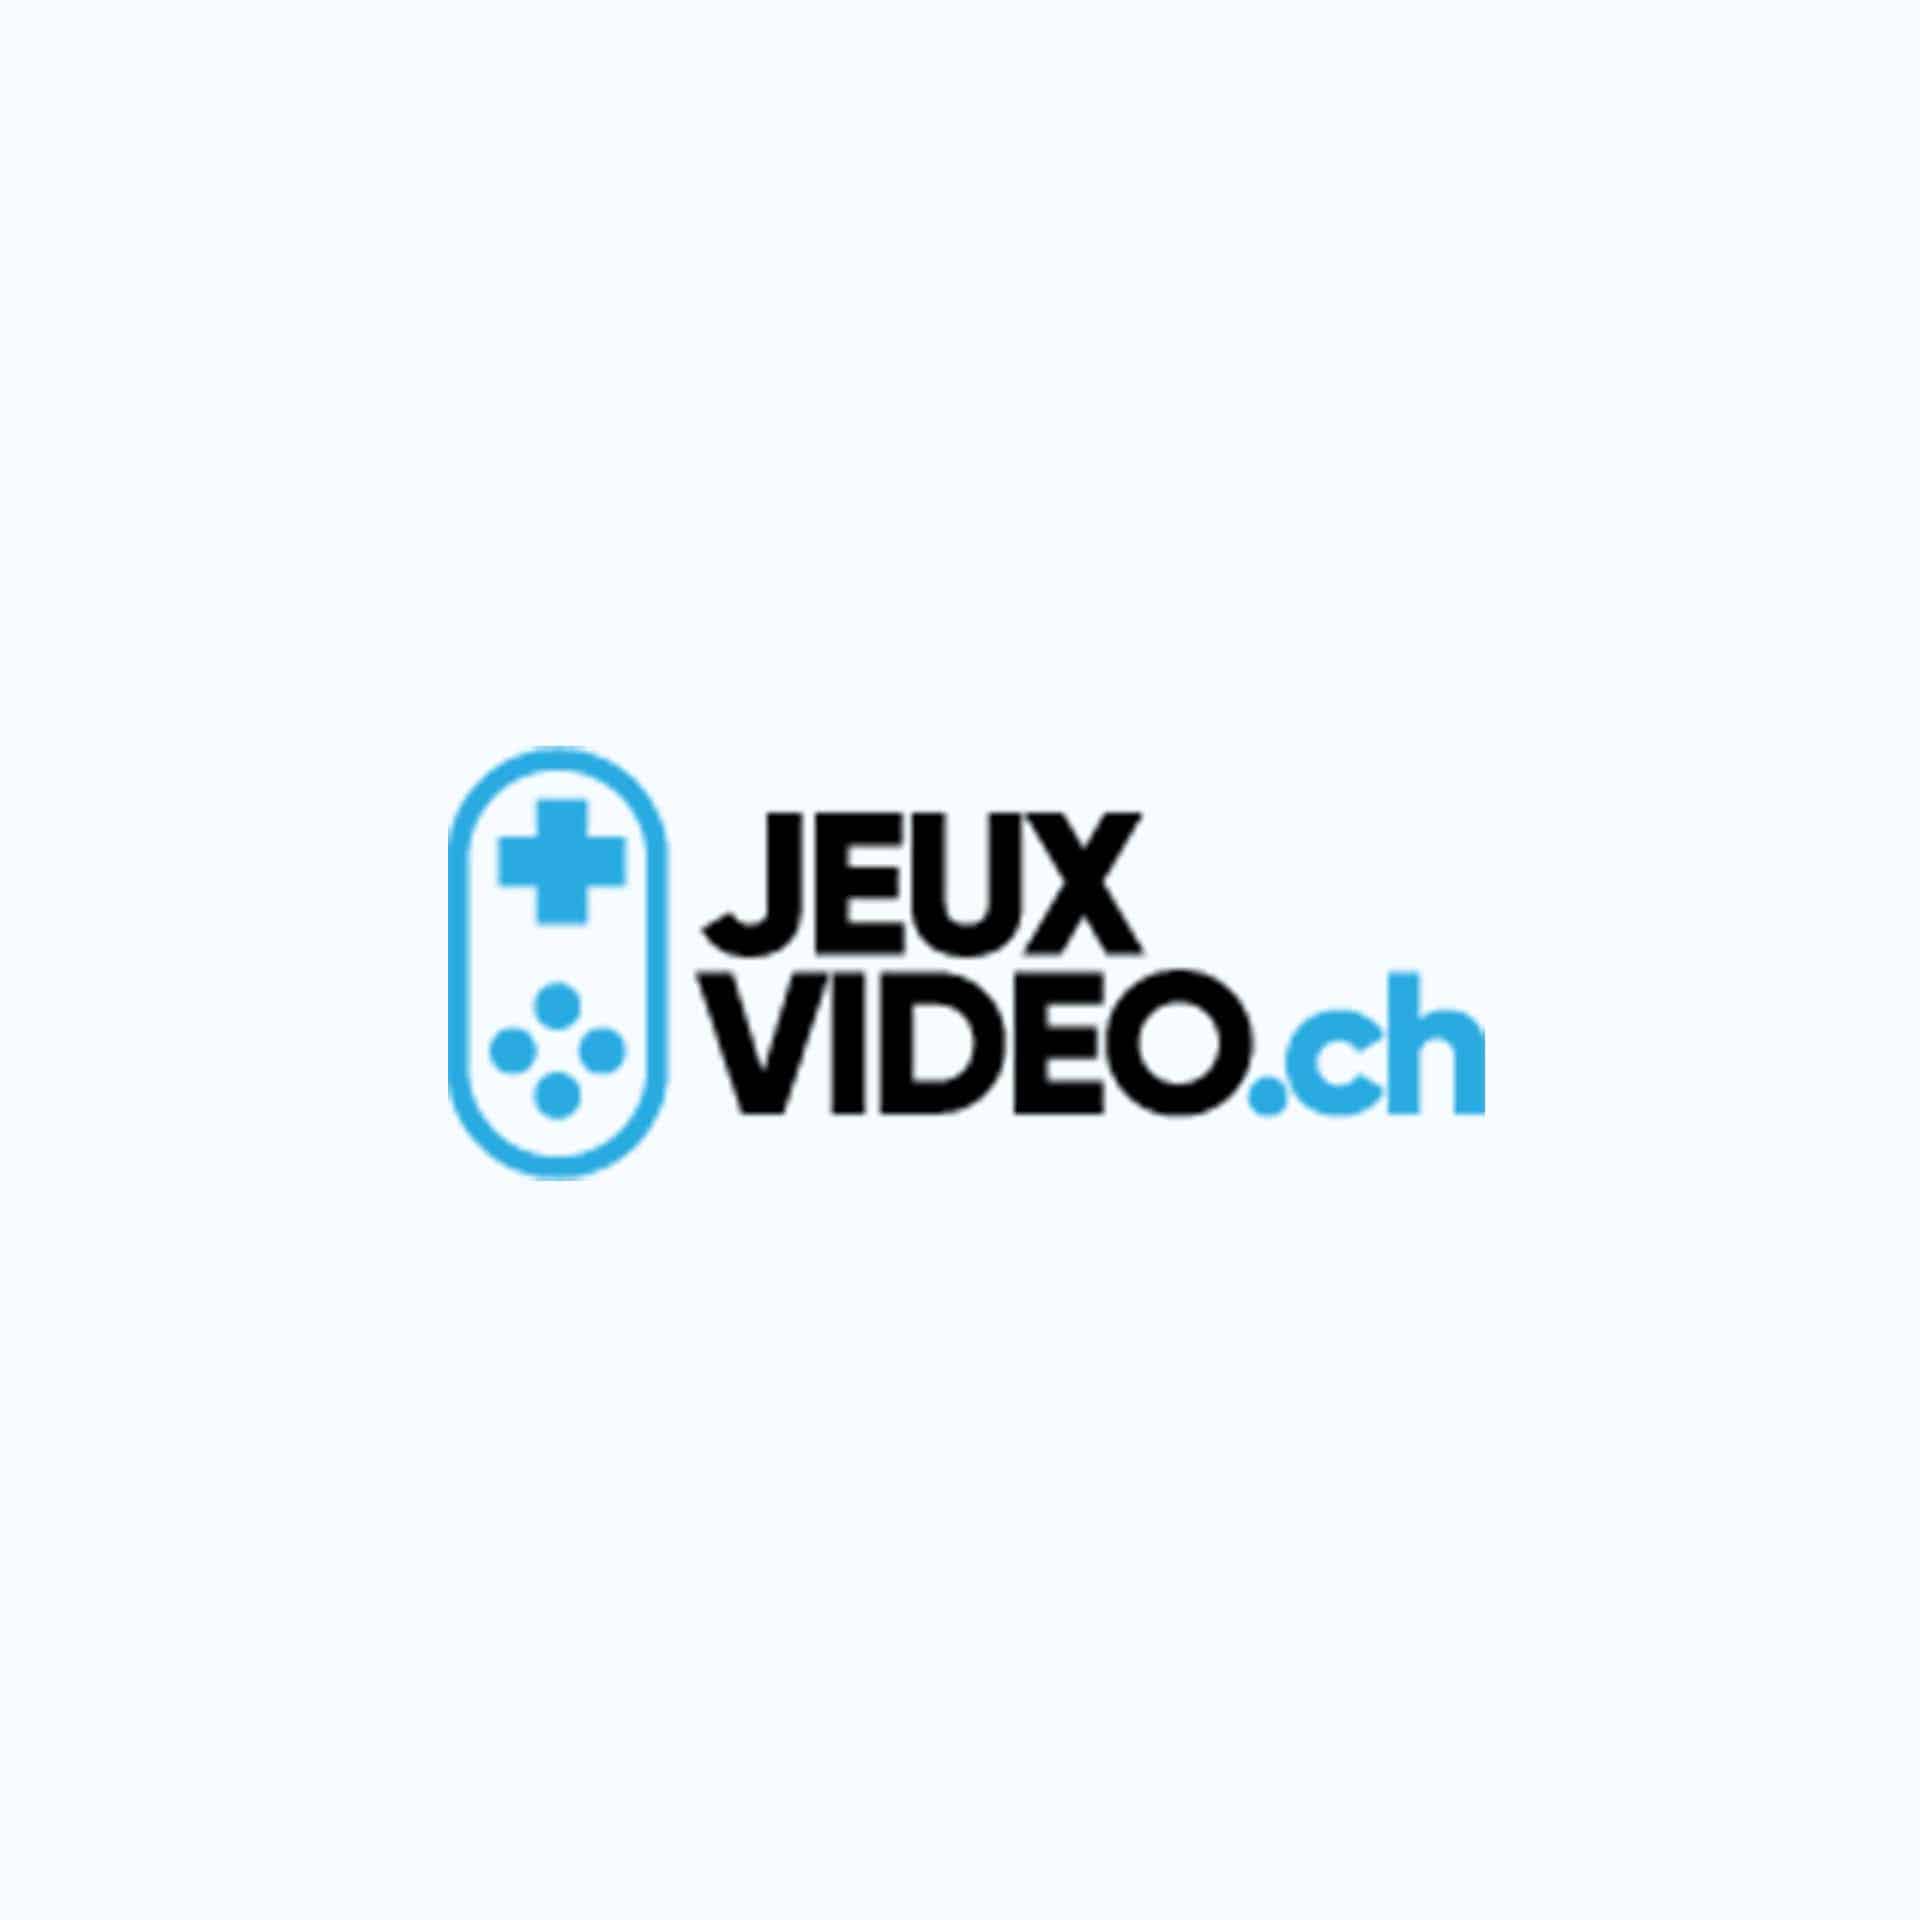 Games video.ch logo